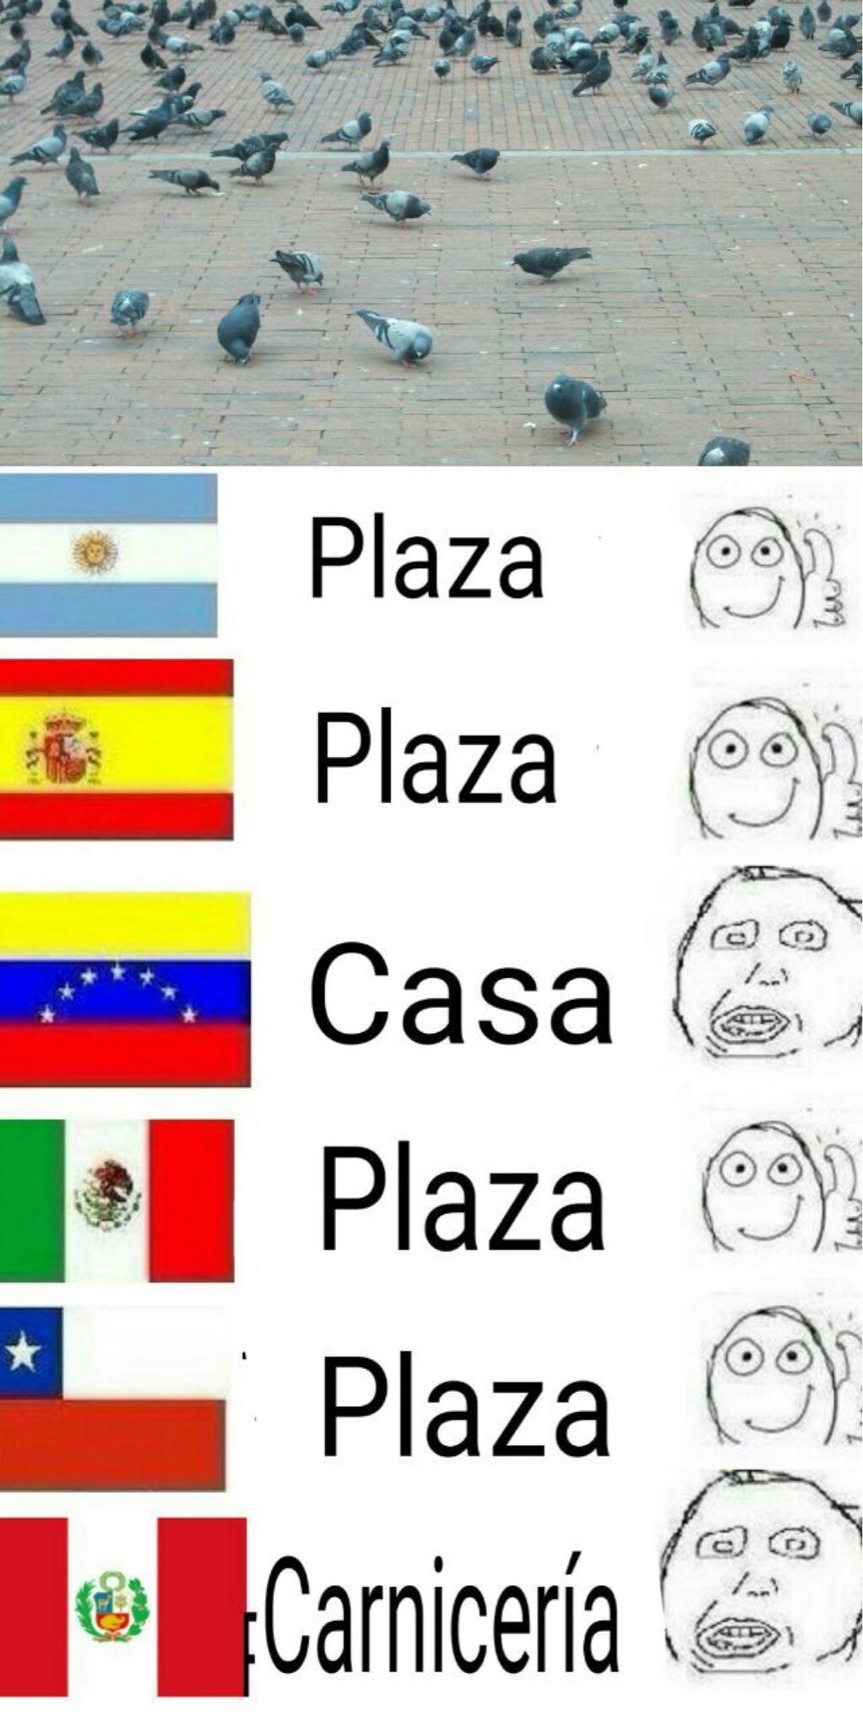 plaza - meme